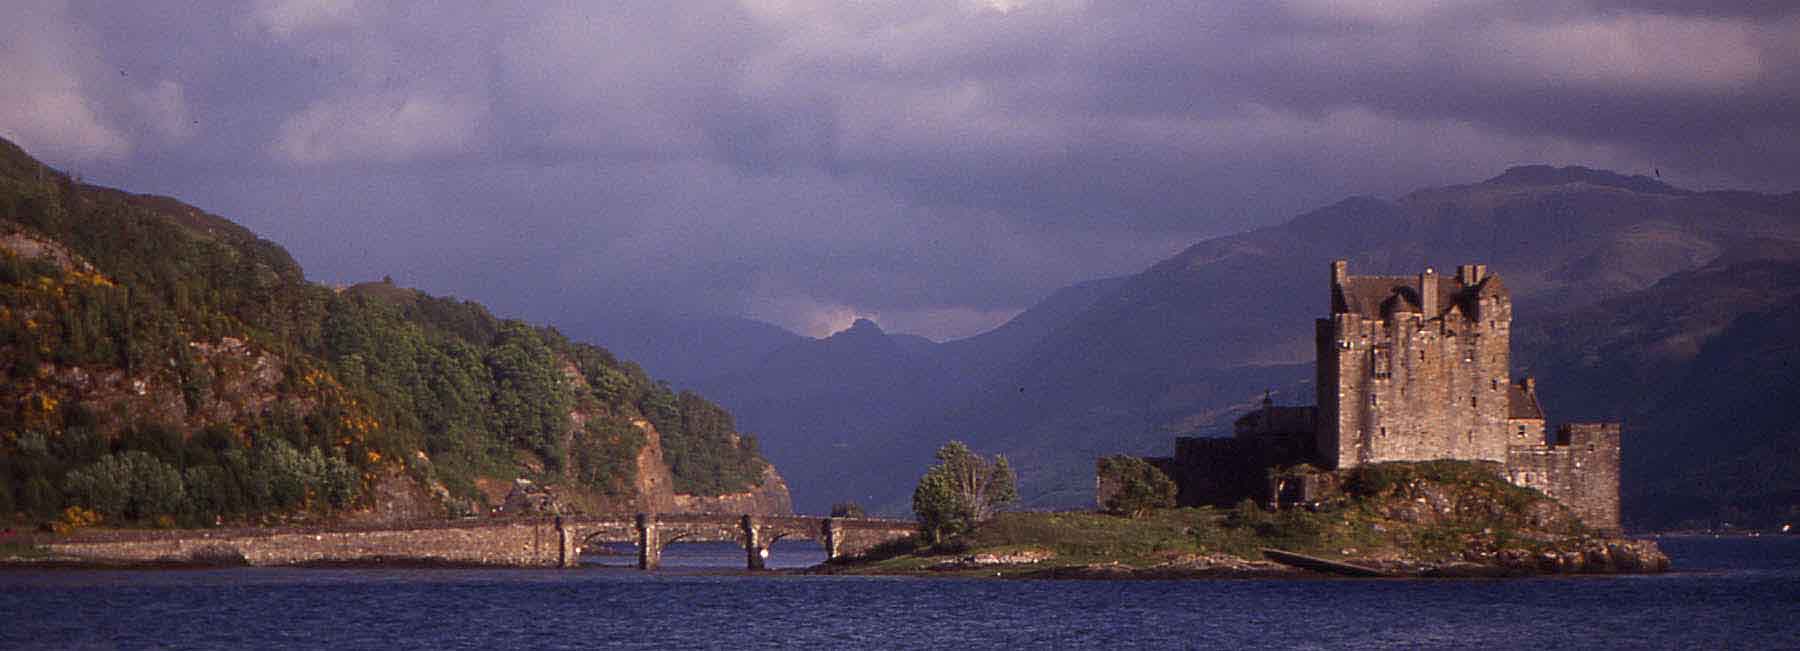 EILEAN DONAN CASTLE - Go to Mysterious Scotland